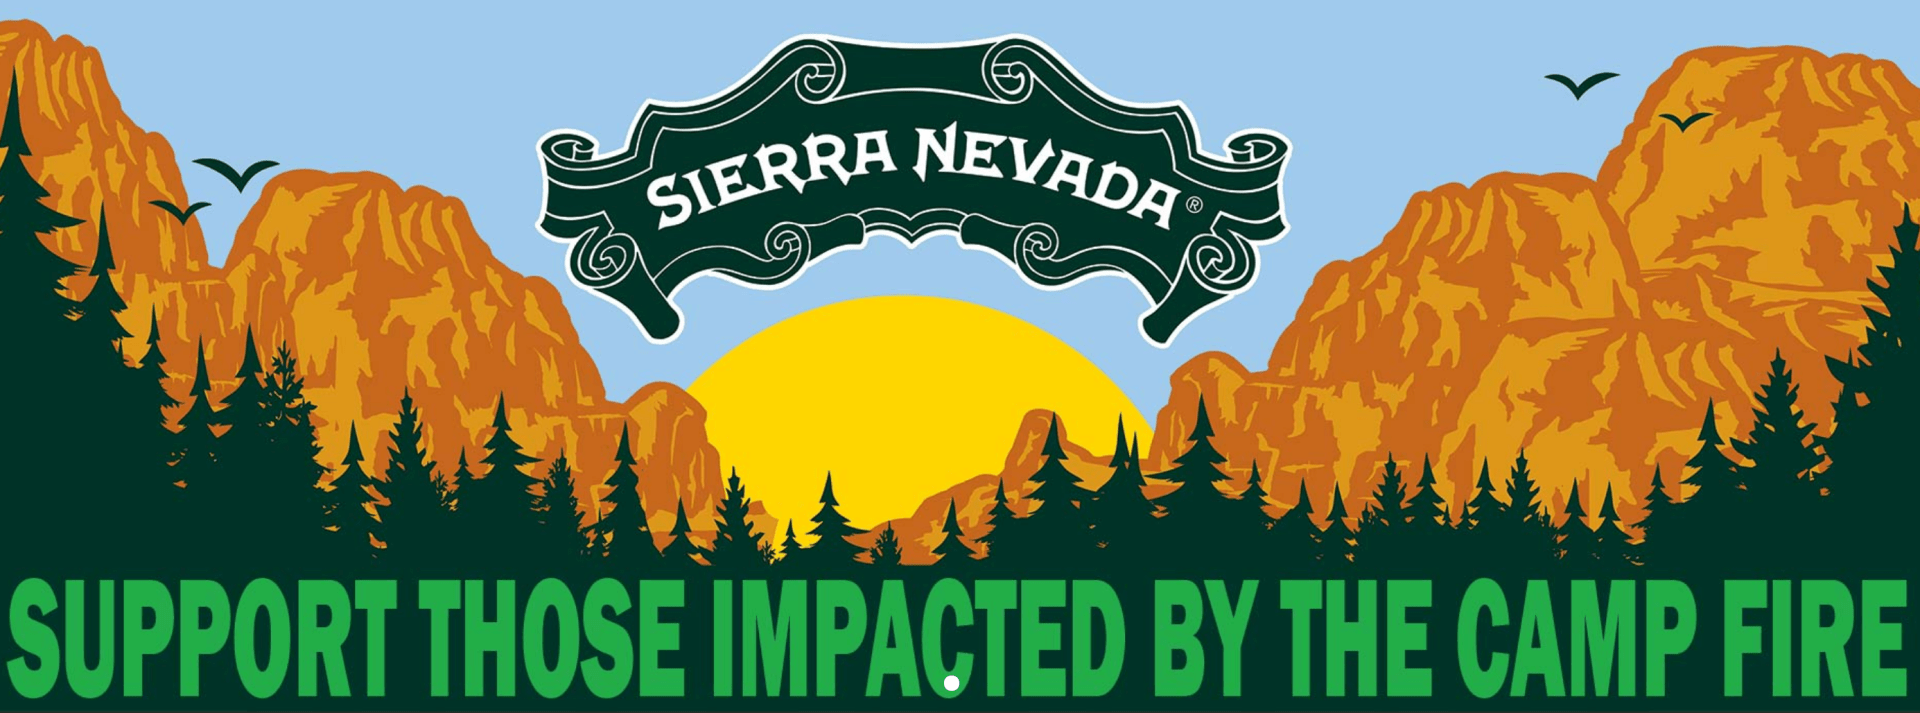 2018 Sierra Nevada Logo - Sierra Nevada Resilience Beer - Support victims of California's ...